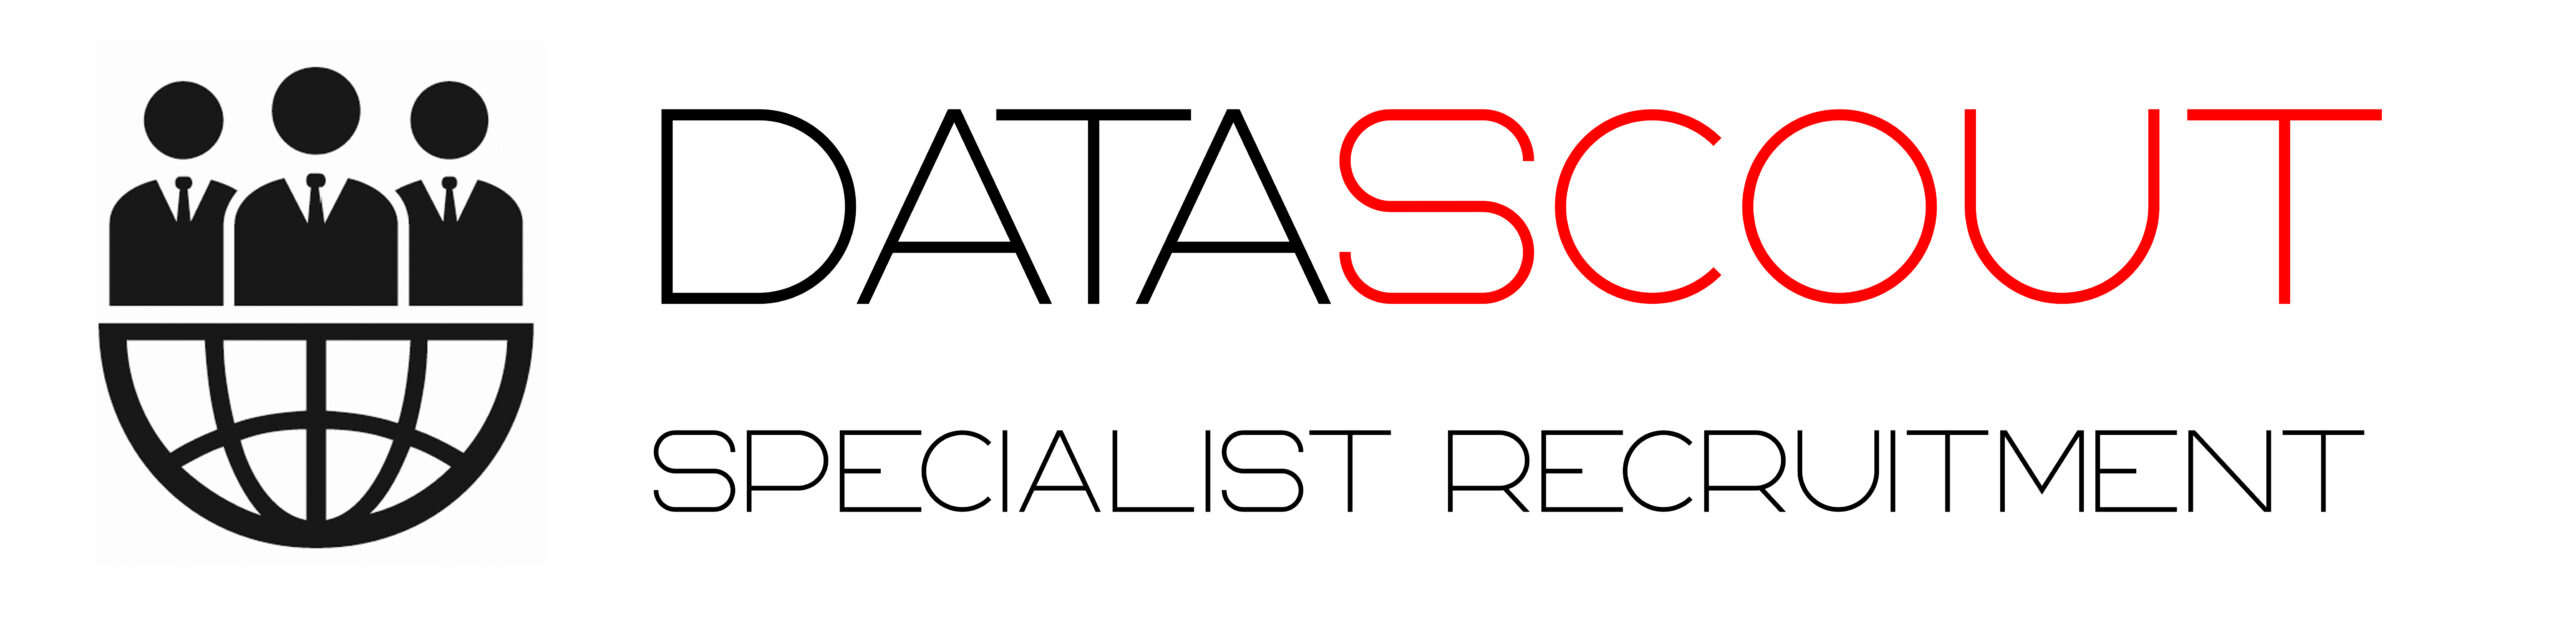 DataScout Specialist Recruitment